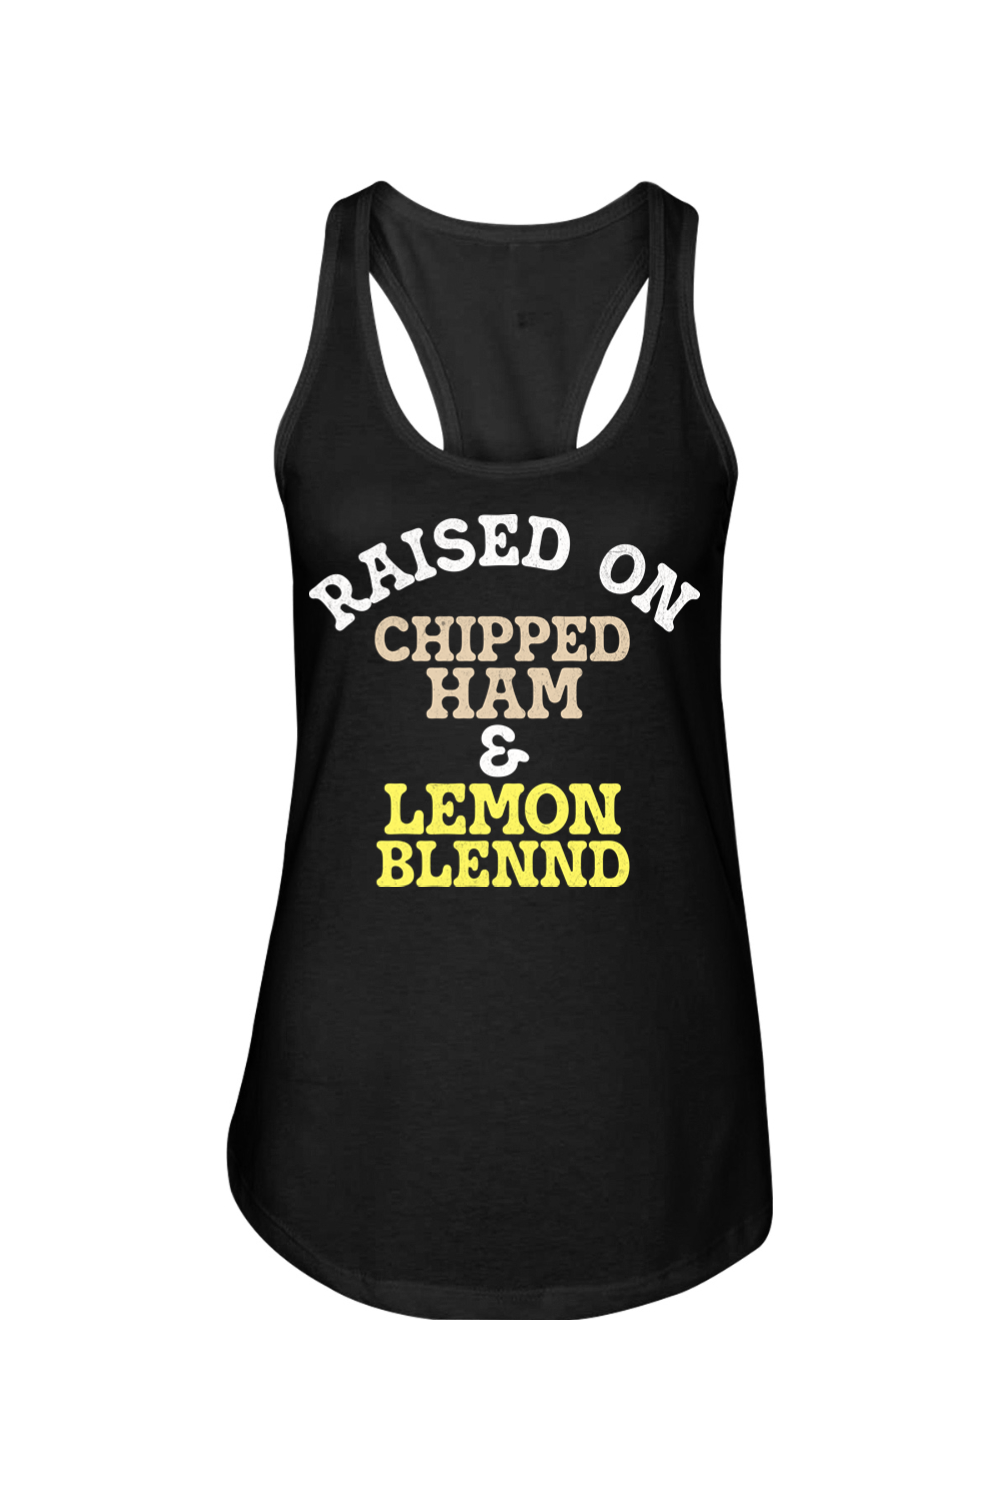 Raised on Chipped Ham & Lemon Blennd - Ladies Racerback Tank - Yinzylvania